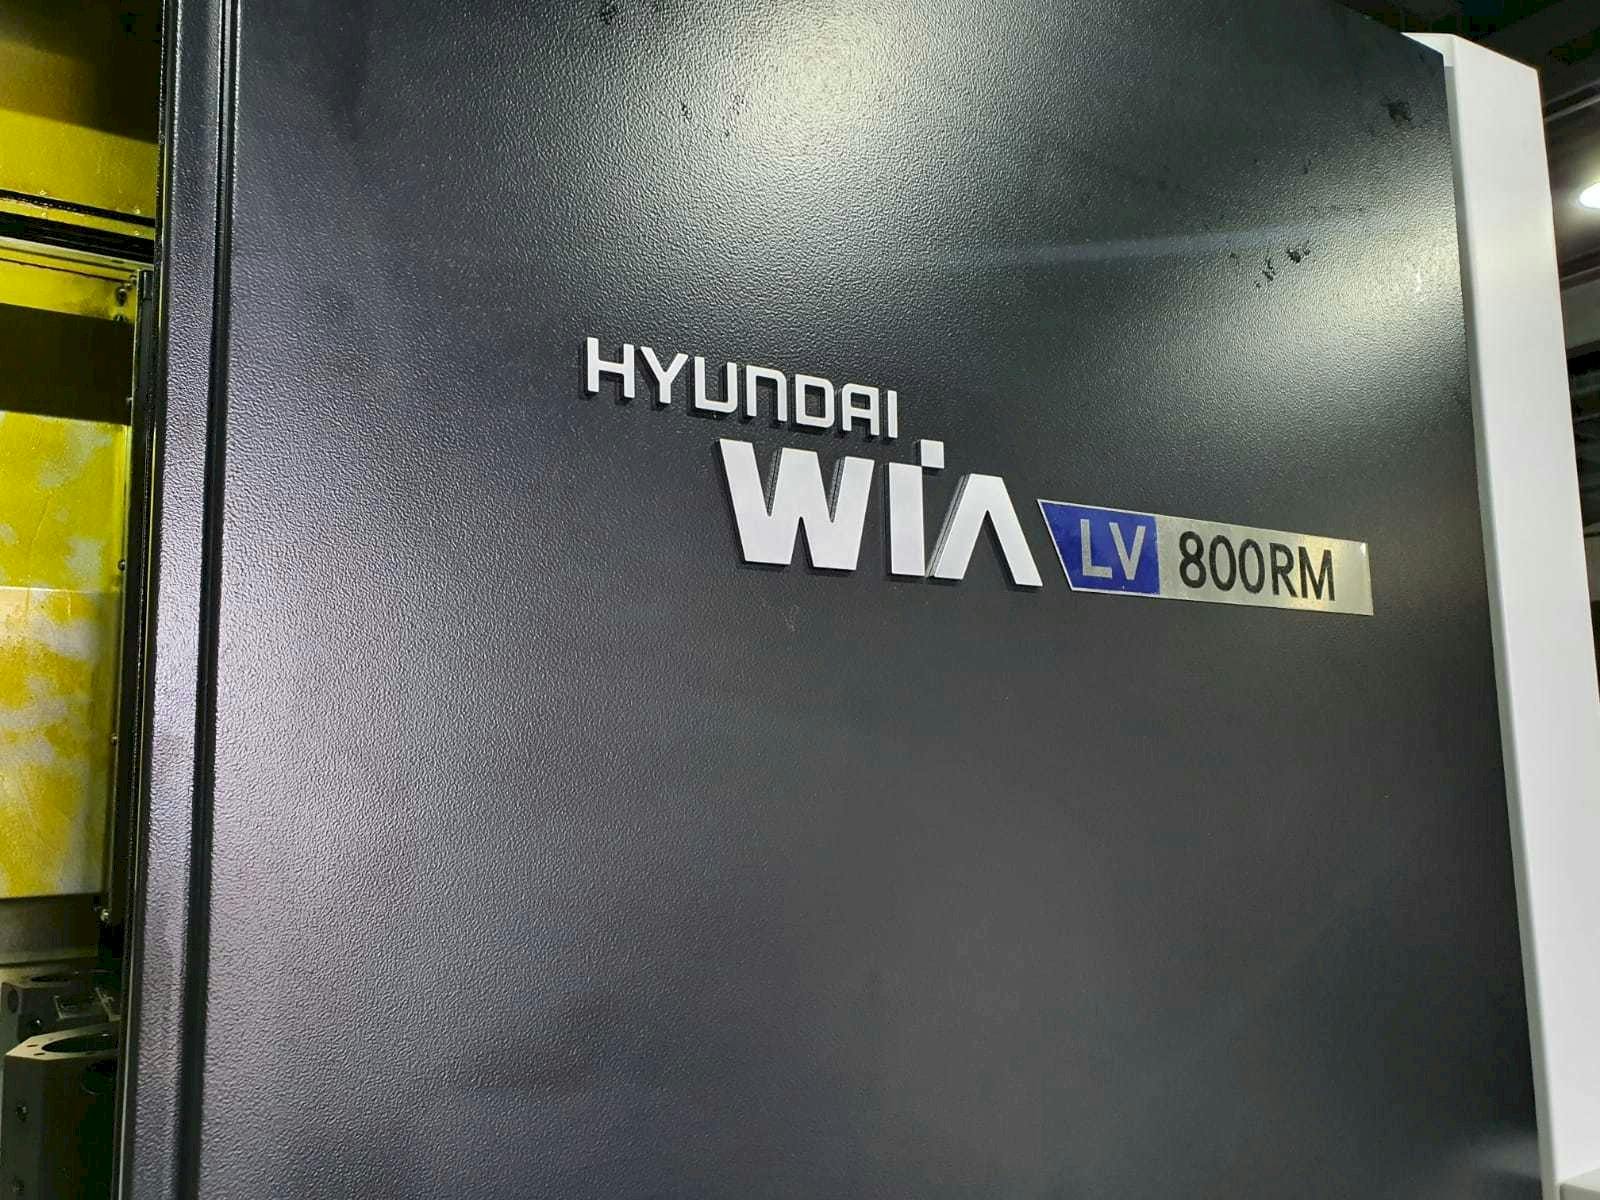 Hyundai Wia LV800RM-maskinen framifrån